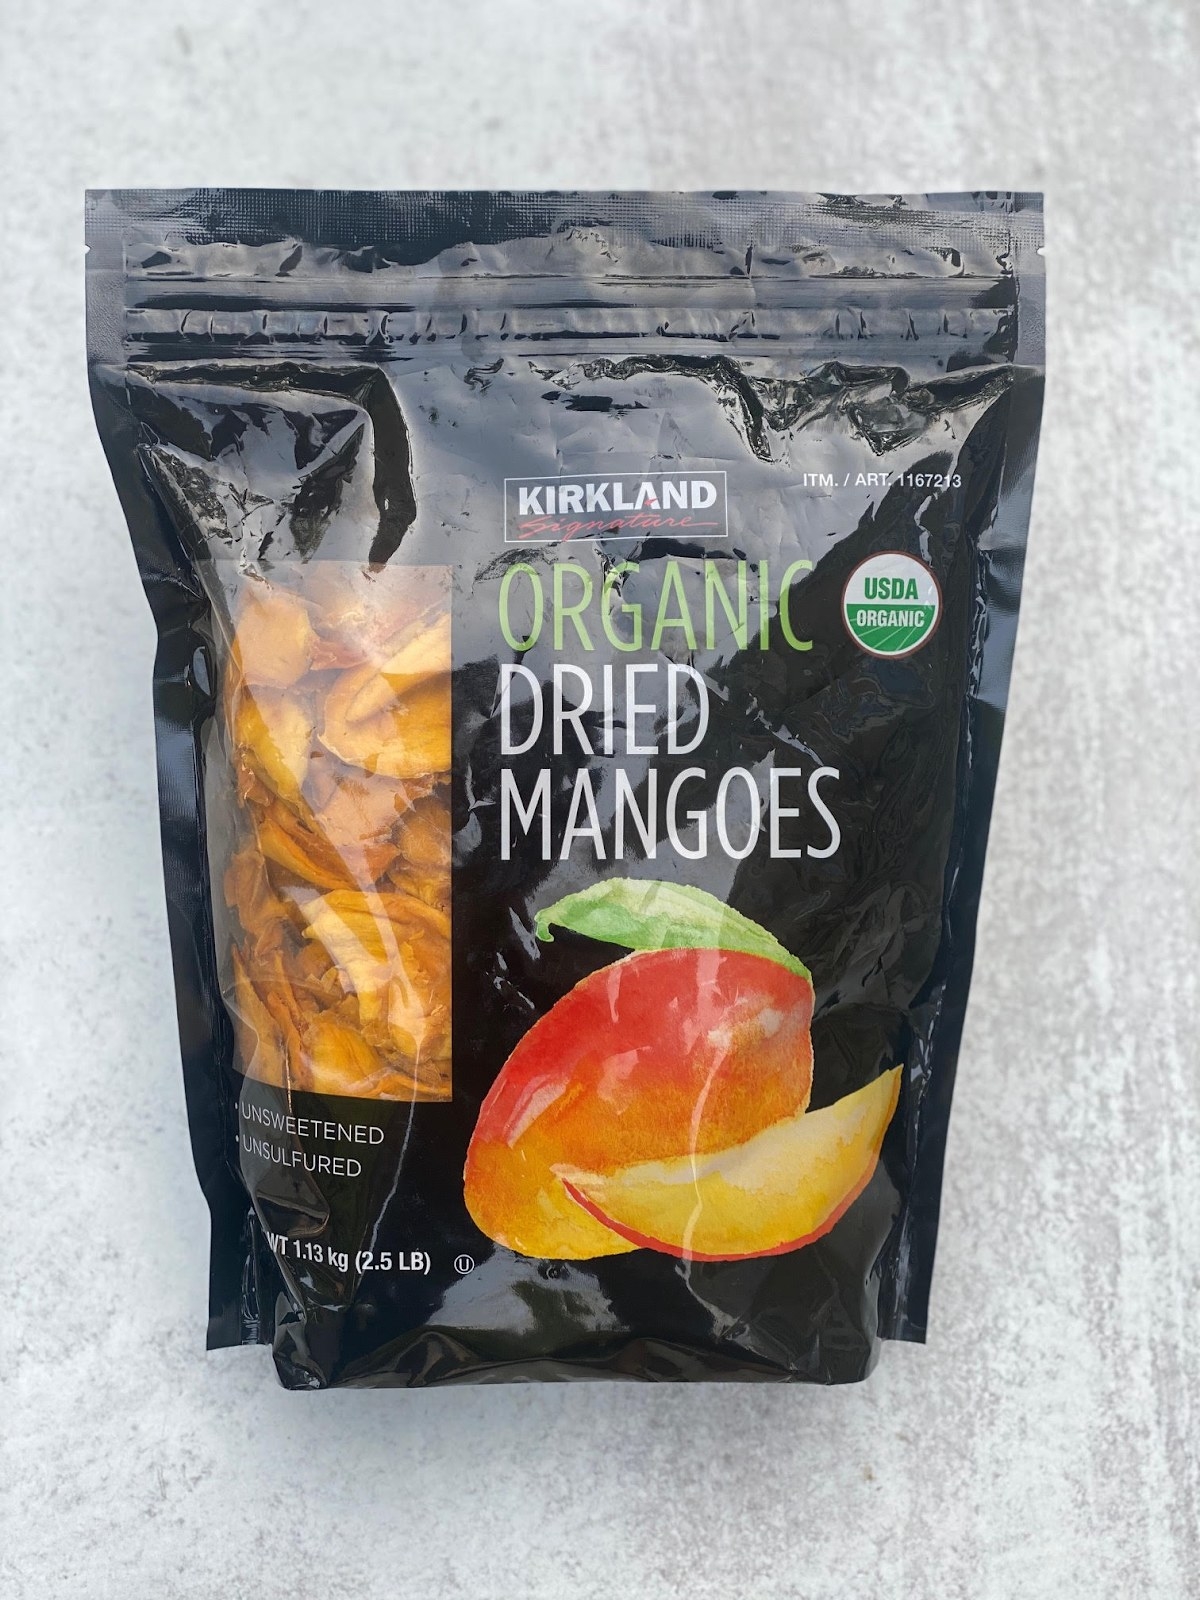 Bag of dried mangoes